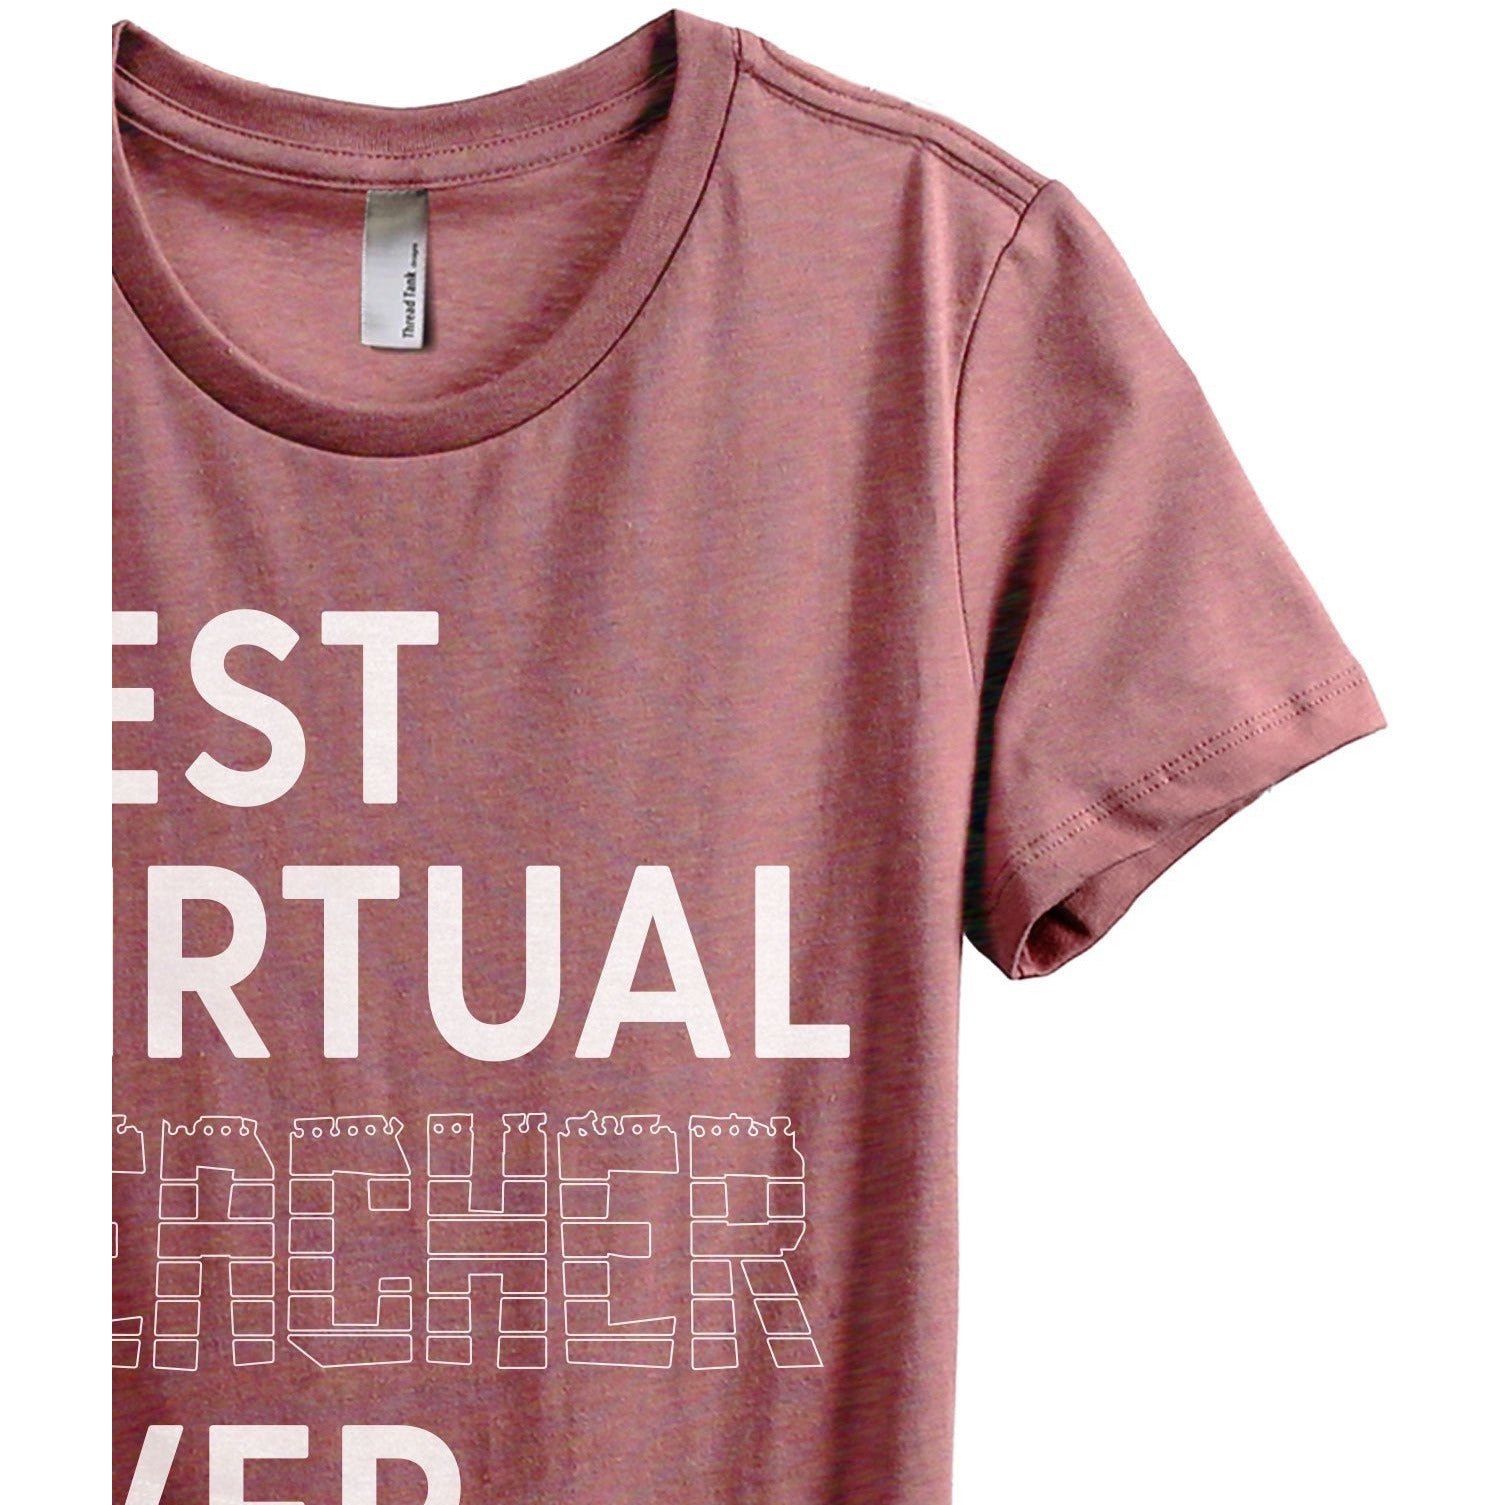 Best Virtual Teacher Ever Women's Relaxed Crewneck T-Shirt Top Tee Heather Rouge Grey Zoom Details